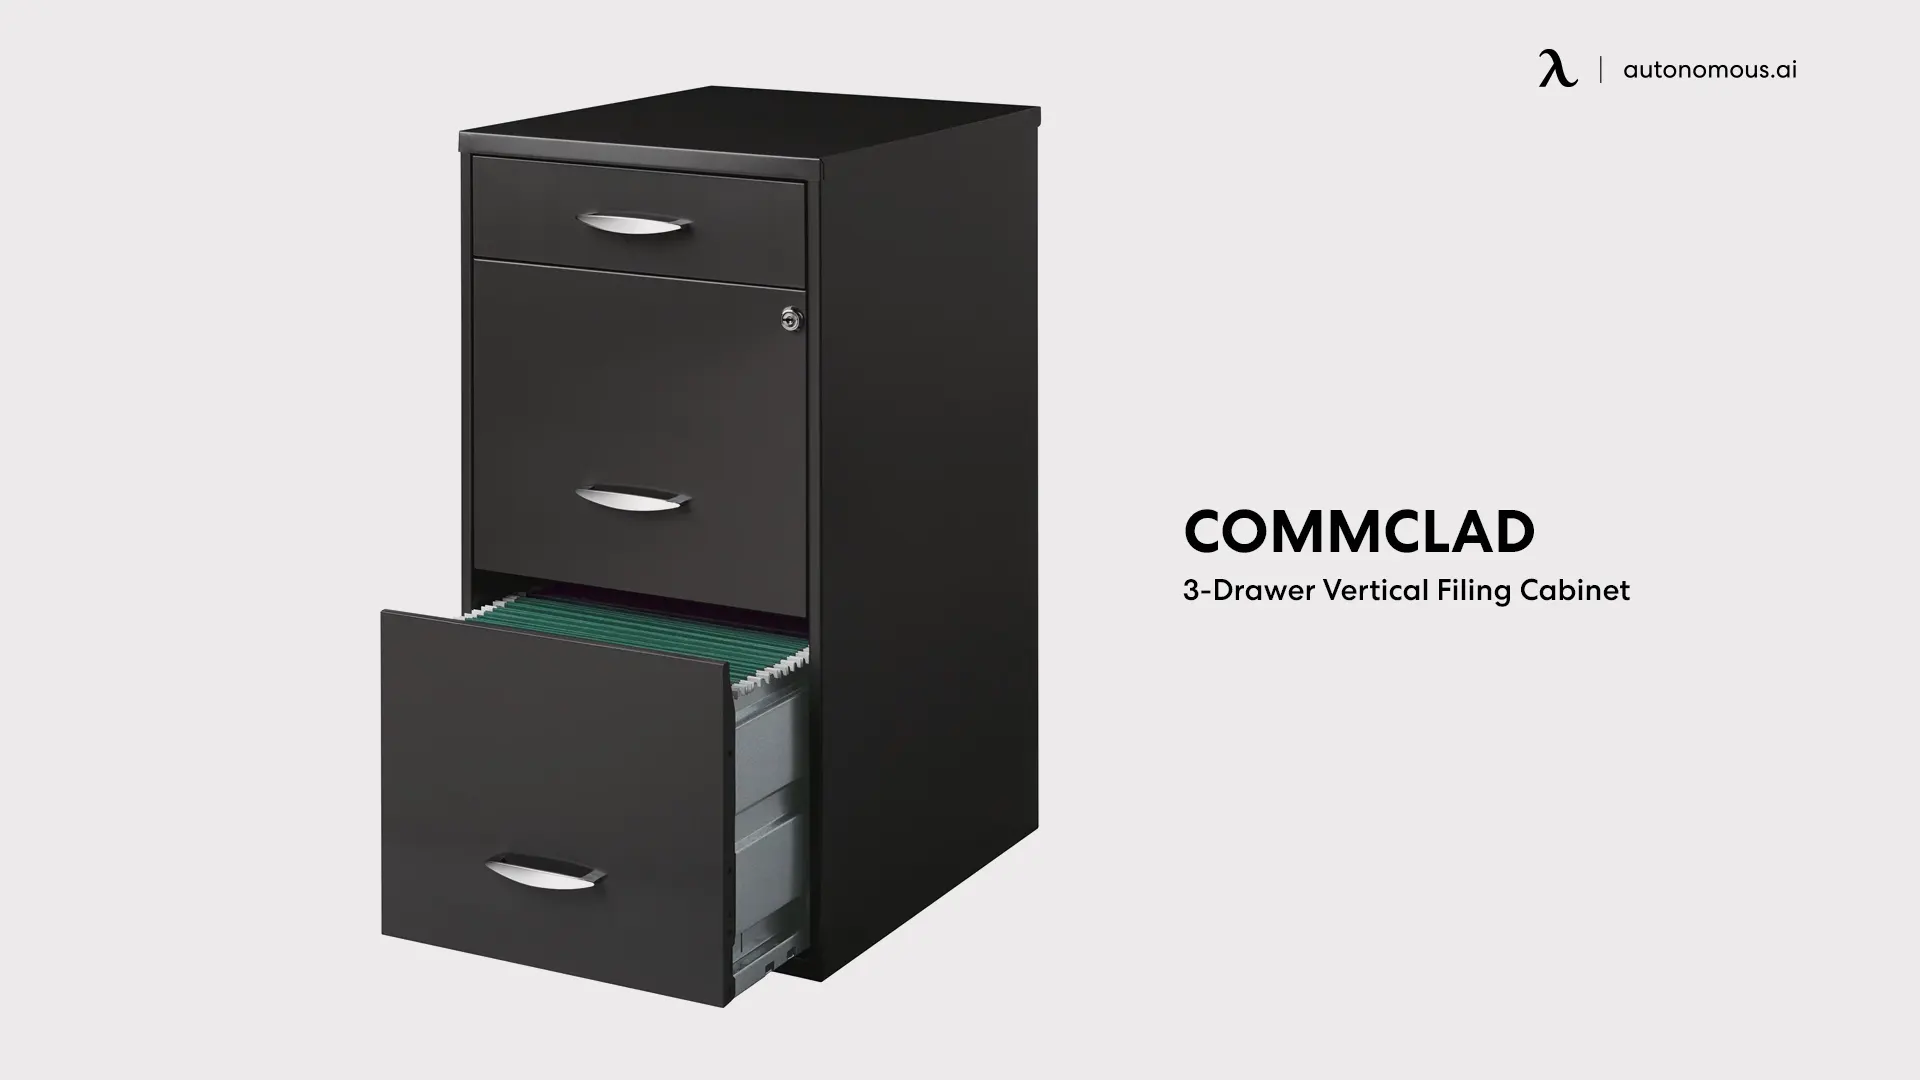 CommClad 3-Drawer Vertical Filing Cabinet